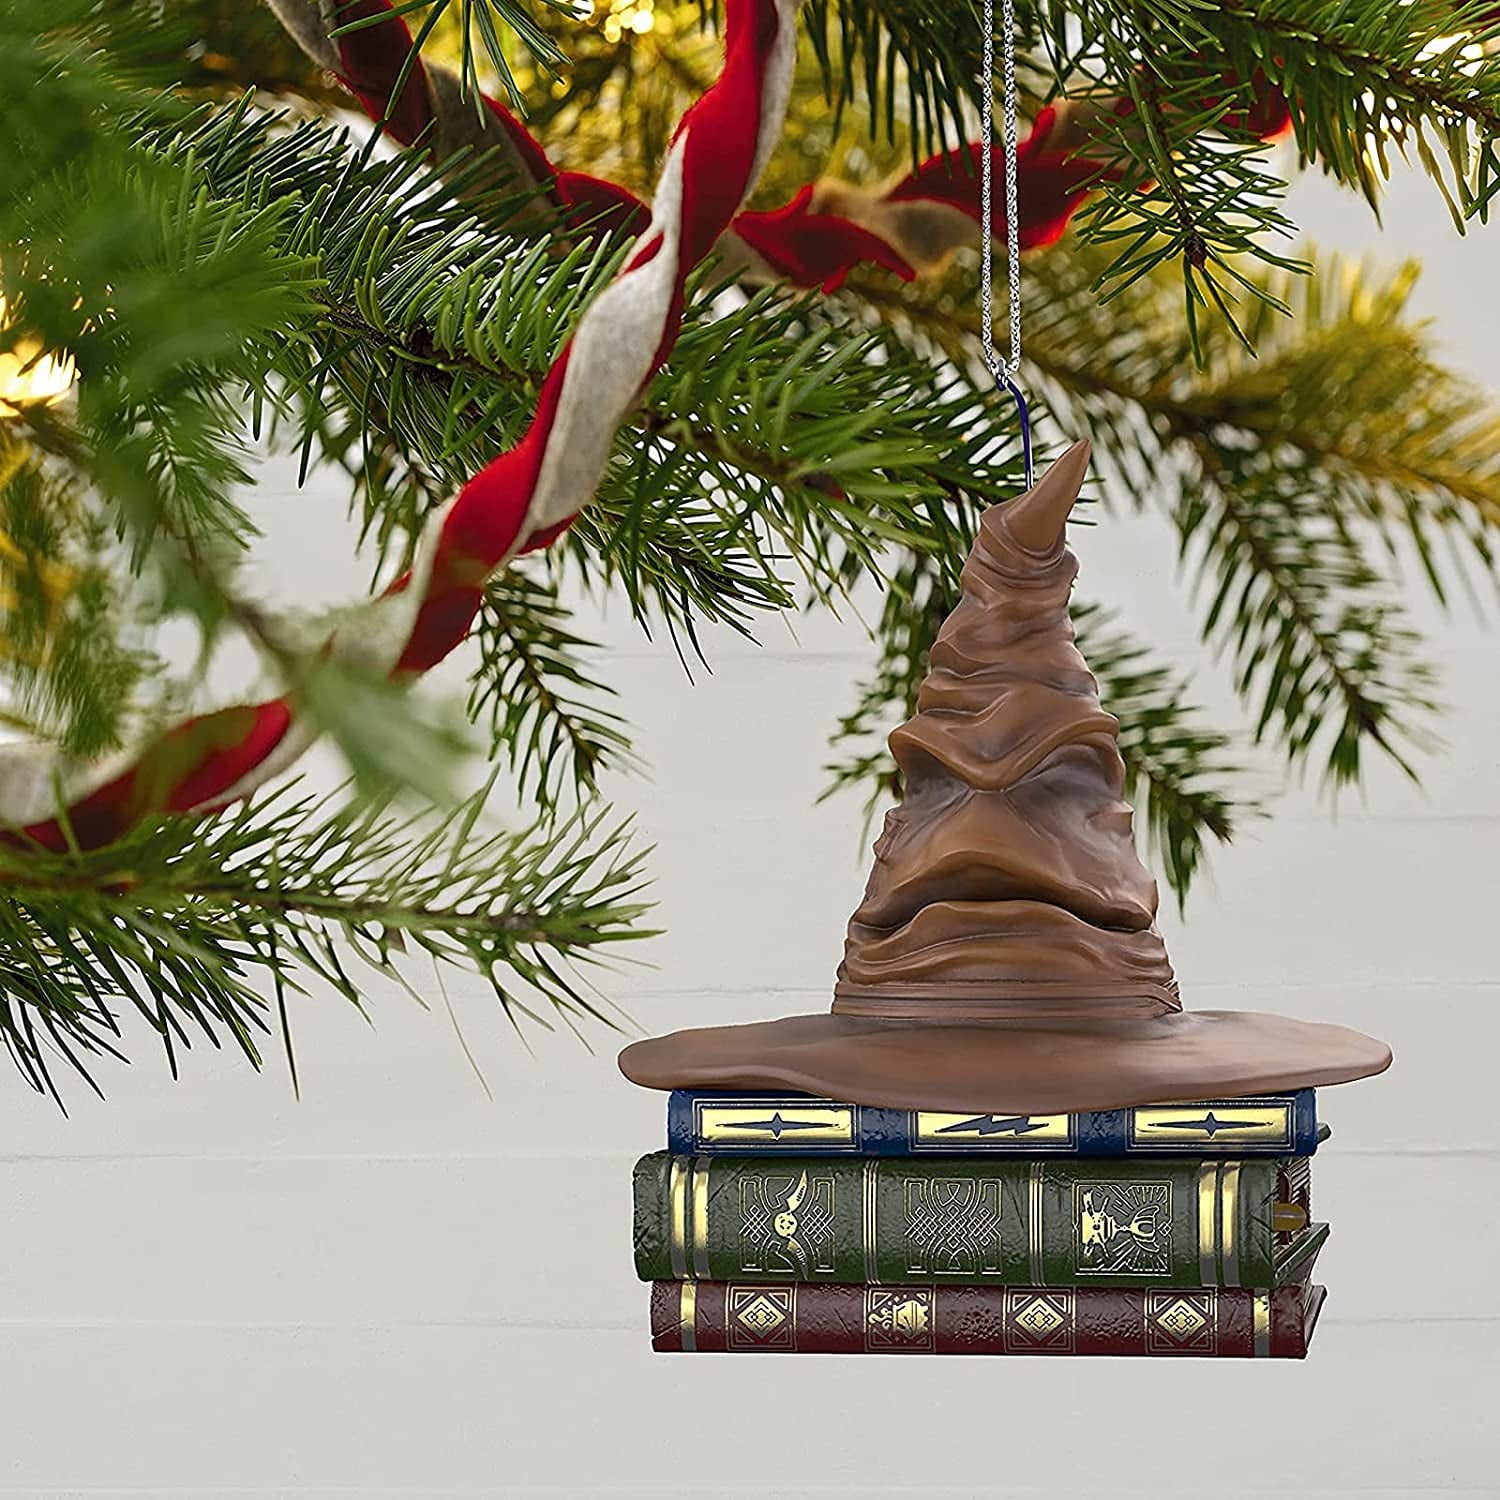 Harry Potter Sorting Hat Christmas Ornament With Sound Hallmark Keepsake Christmas Ornament 2021 Christmas Hat Decoration 2pcs Harry Potter Sorting Hat Talking Ornament Can talk